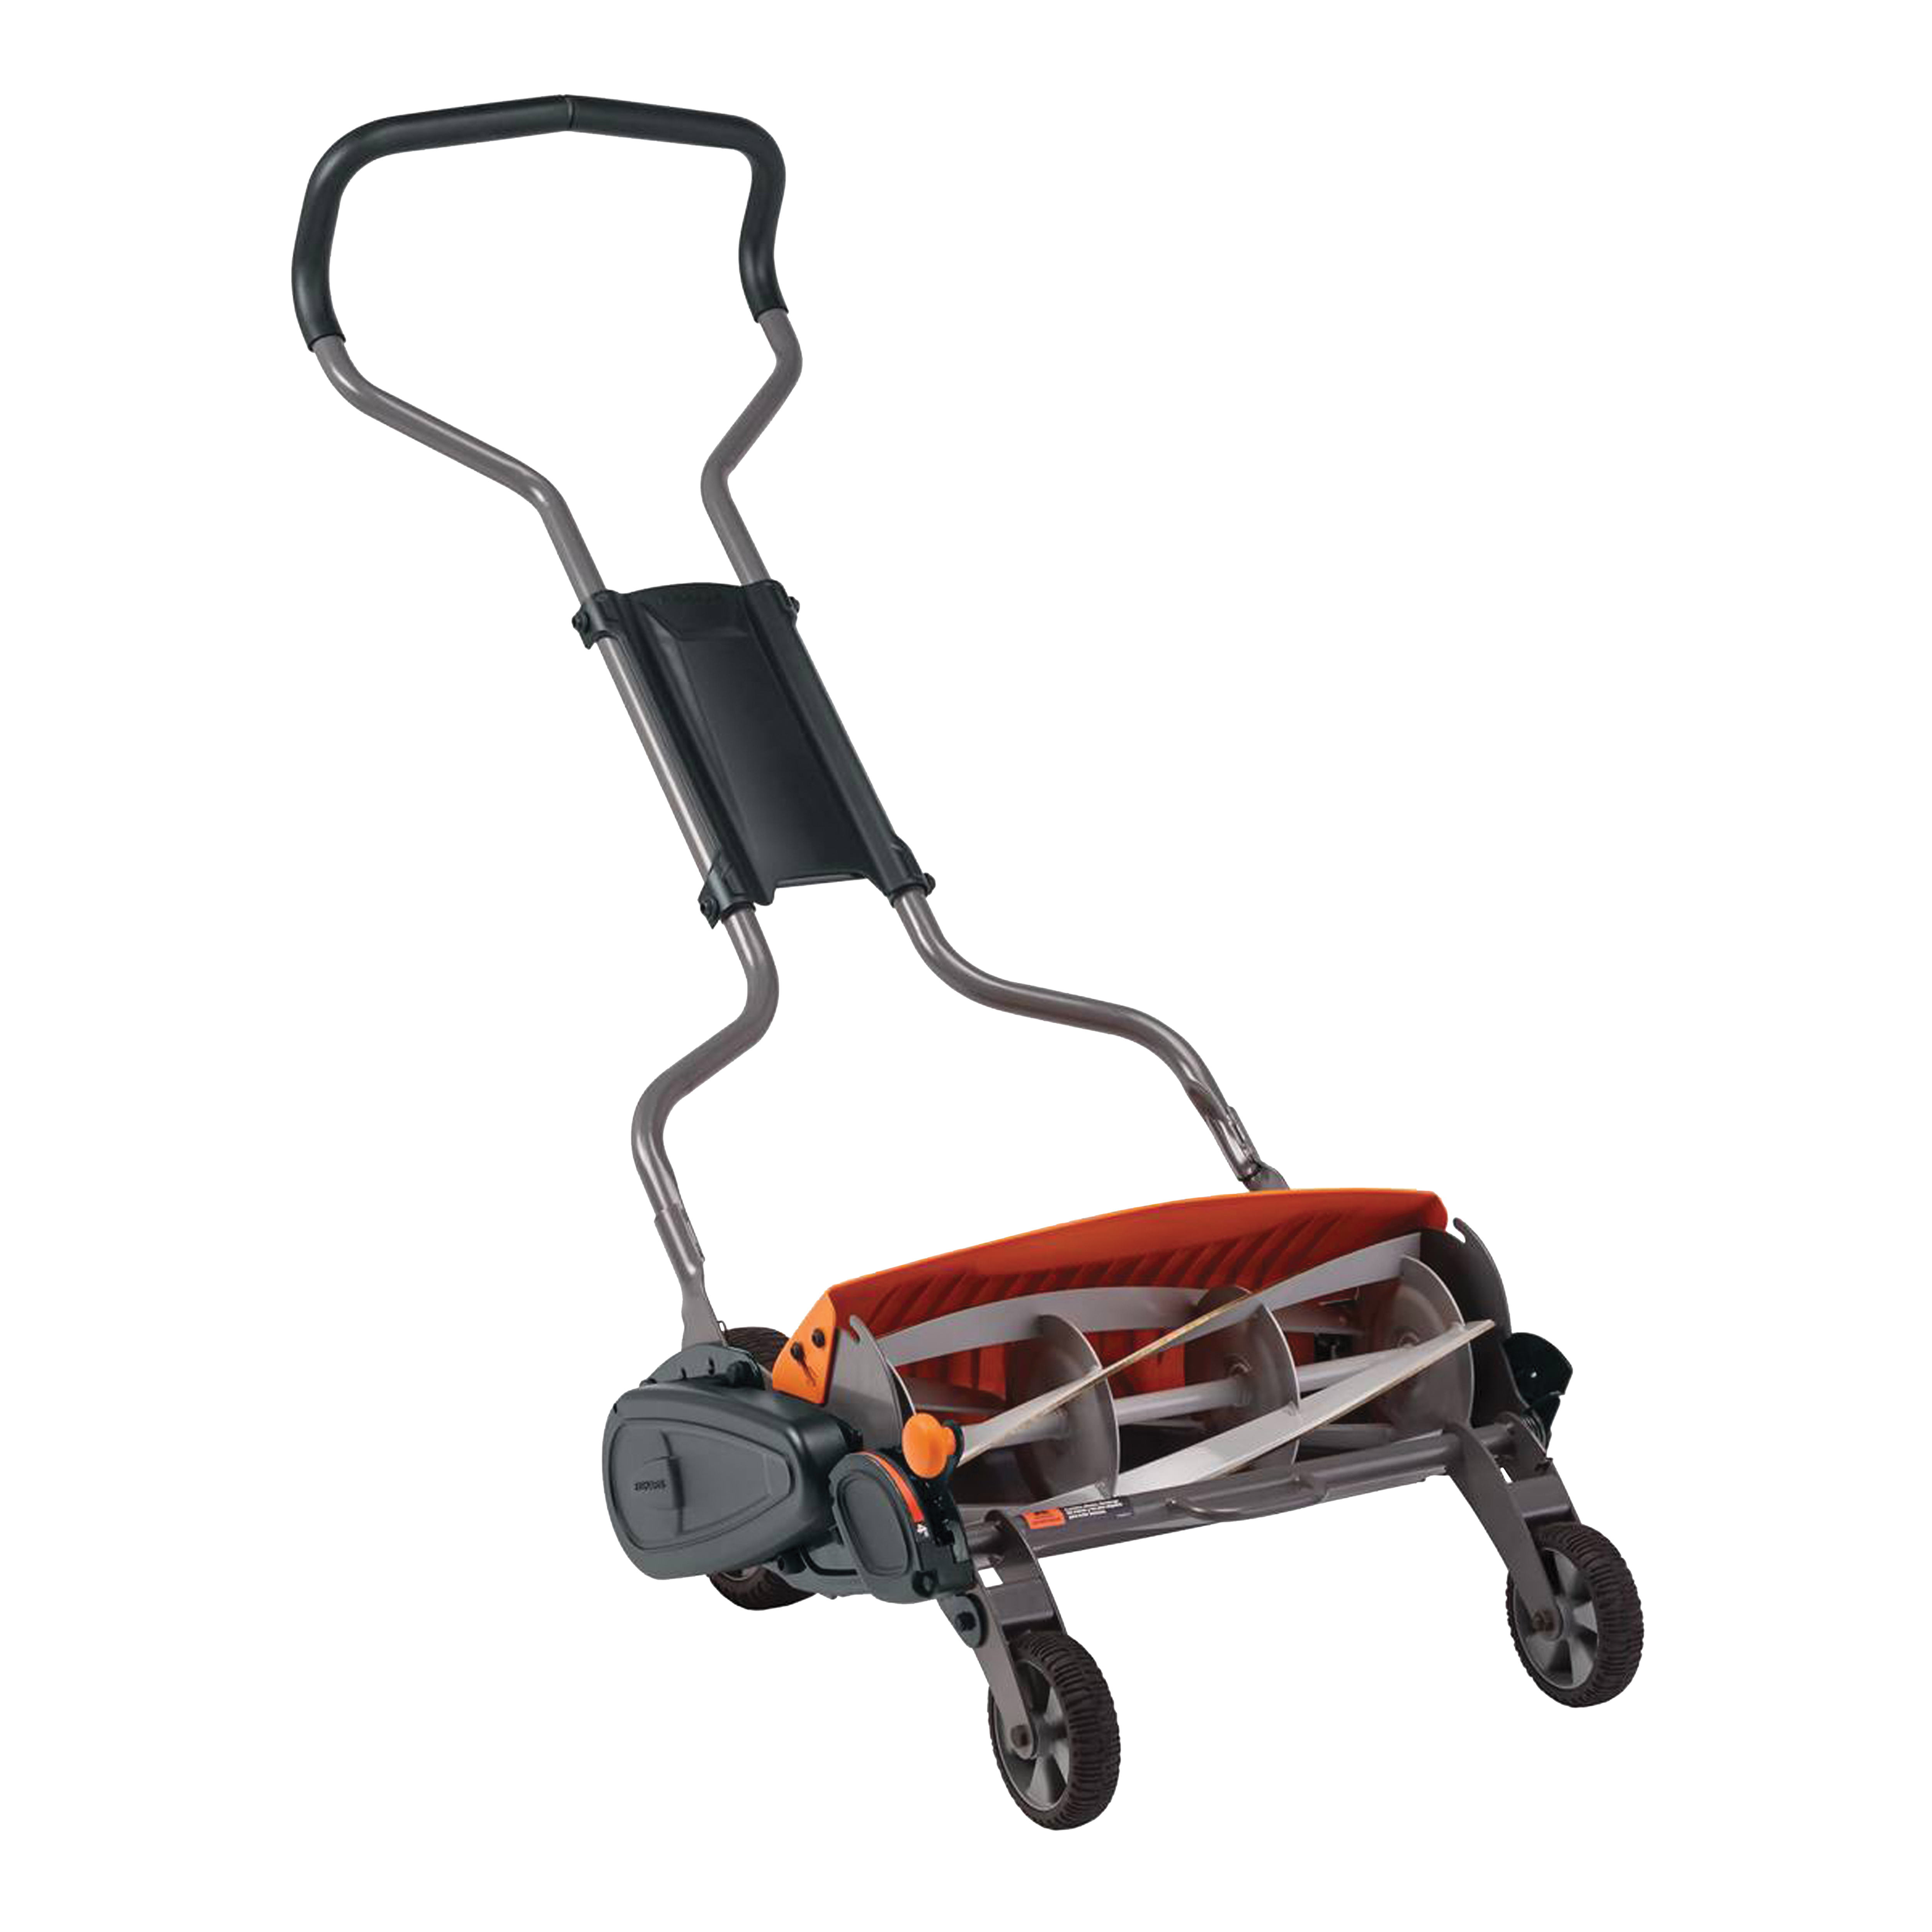 StaySharp 362050-1001 Reel Lawn Mower, 18 in W Cutting, Reel Blade